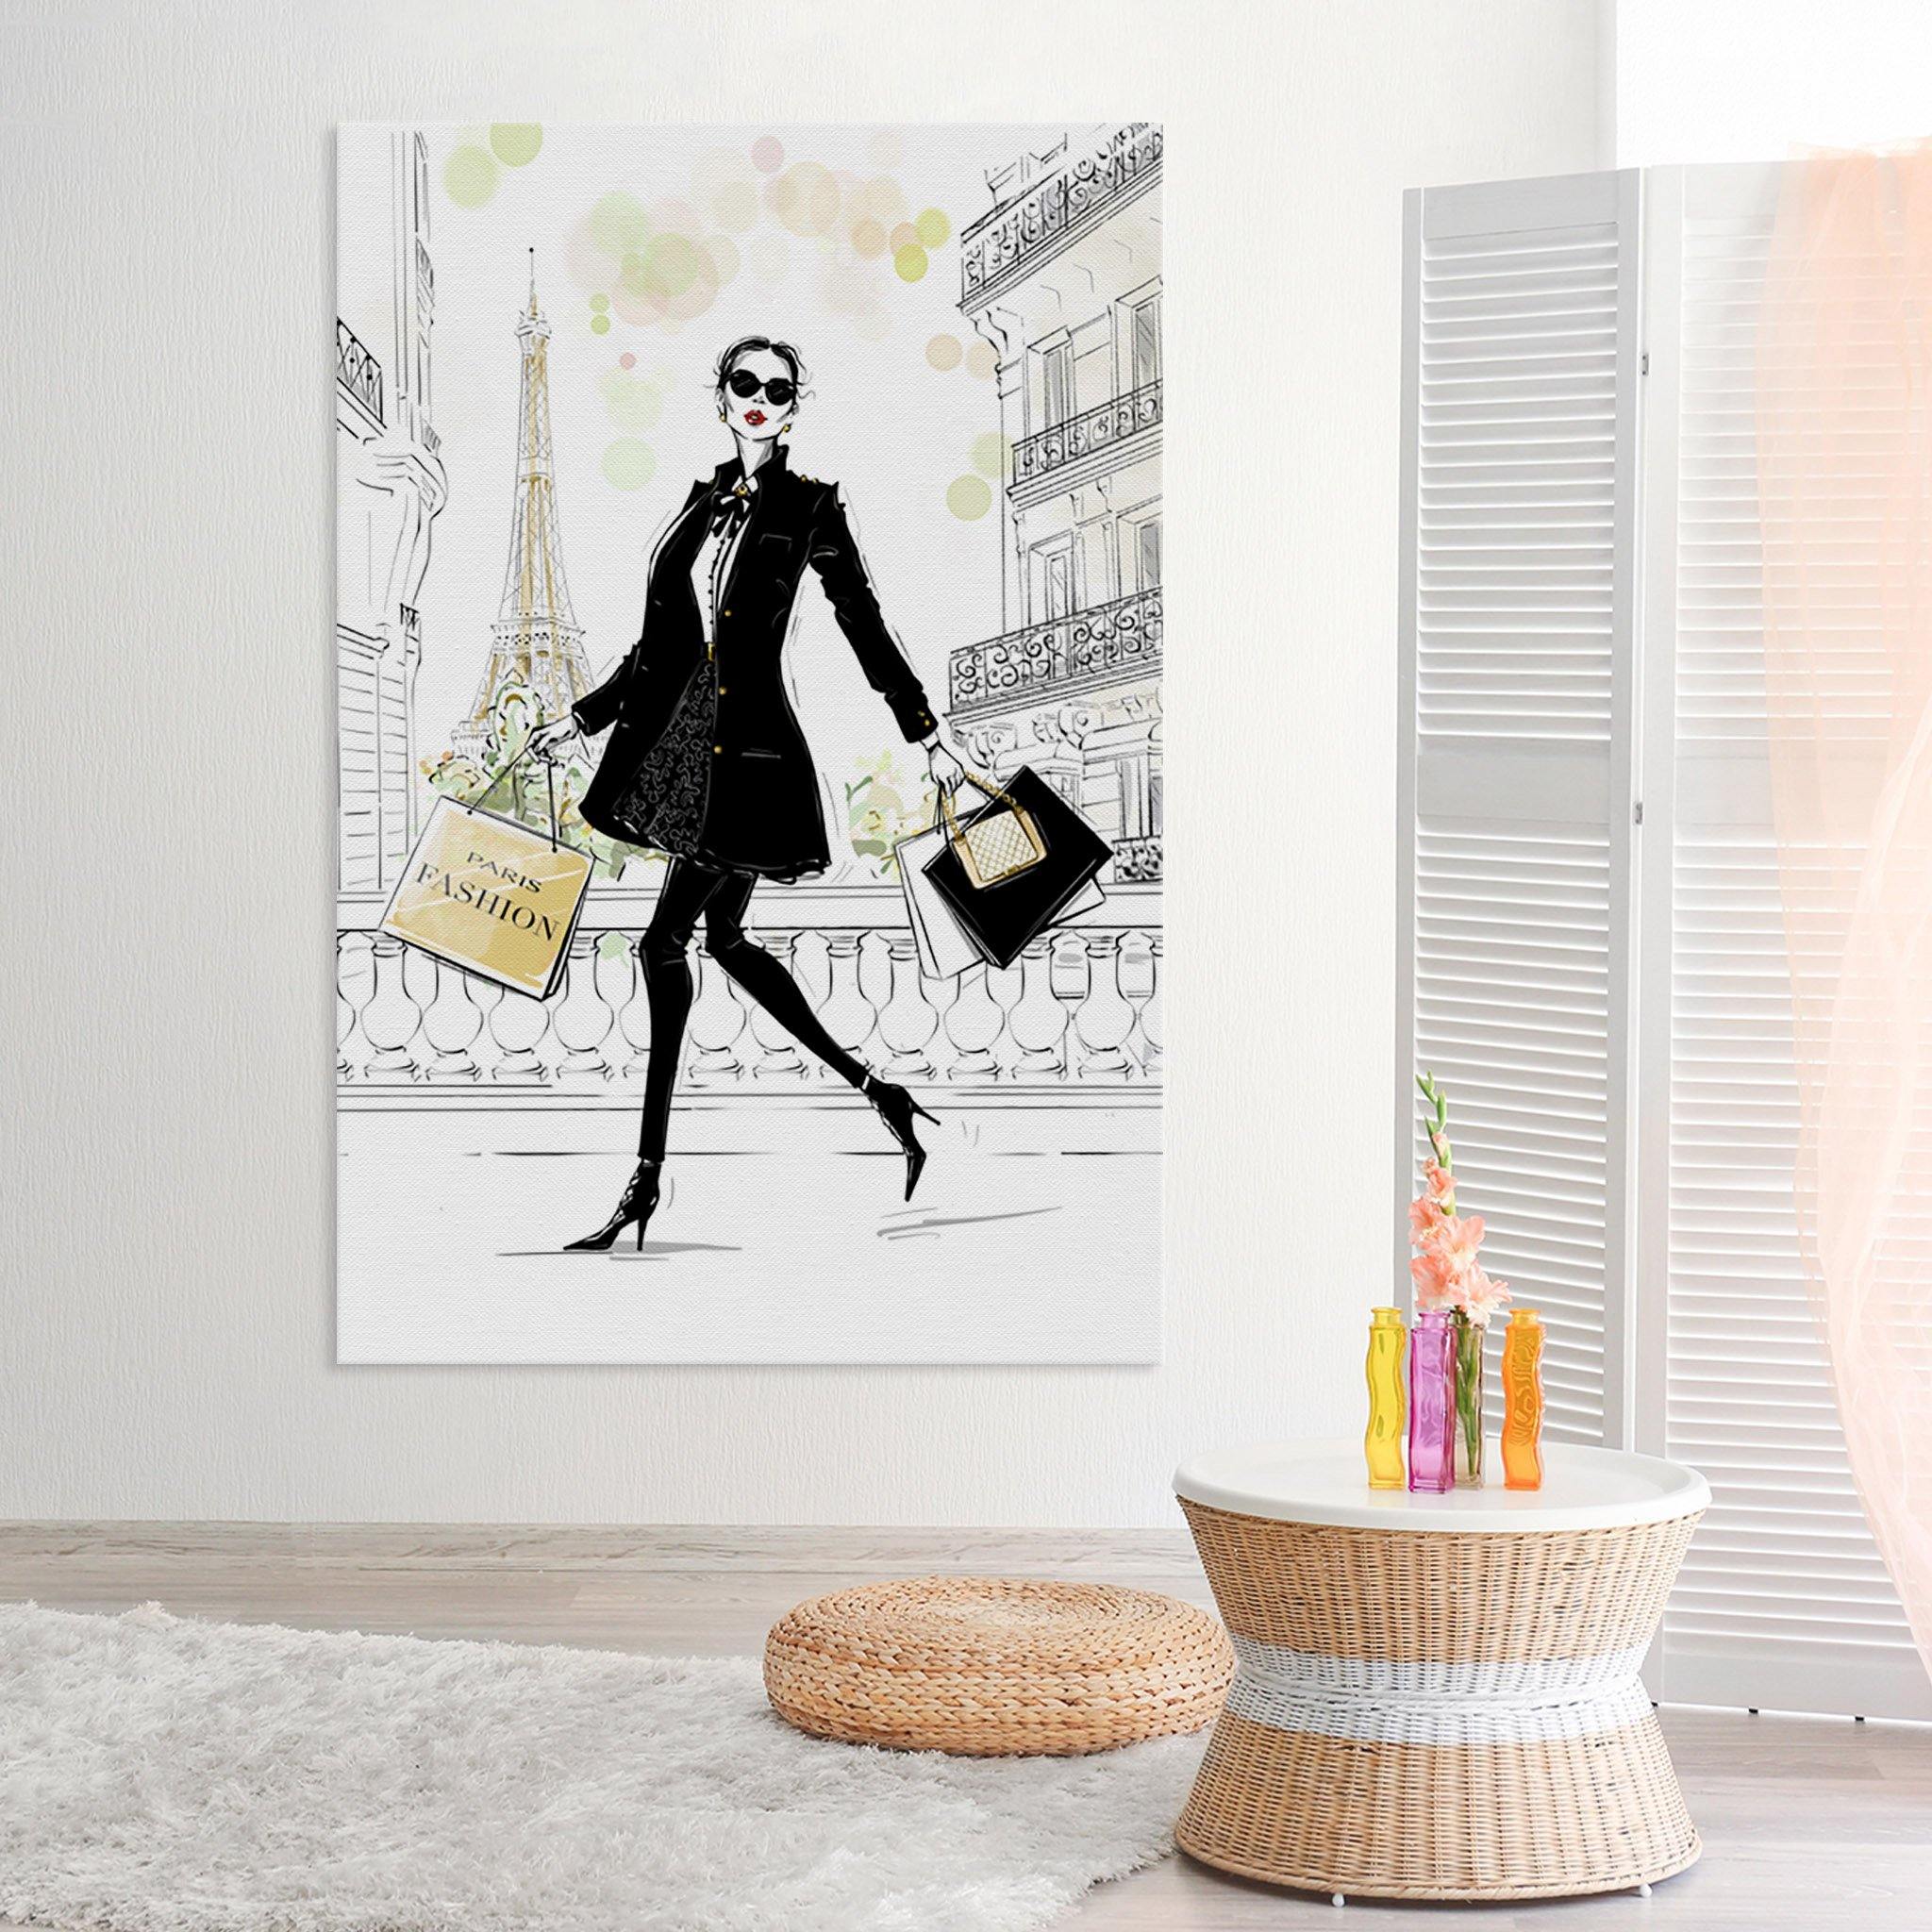 Paris Shopping Fashion - Wall Art Canvas - SharpWallArts